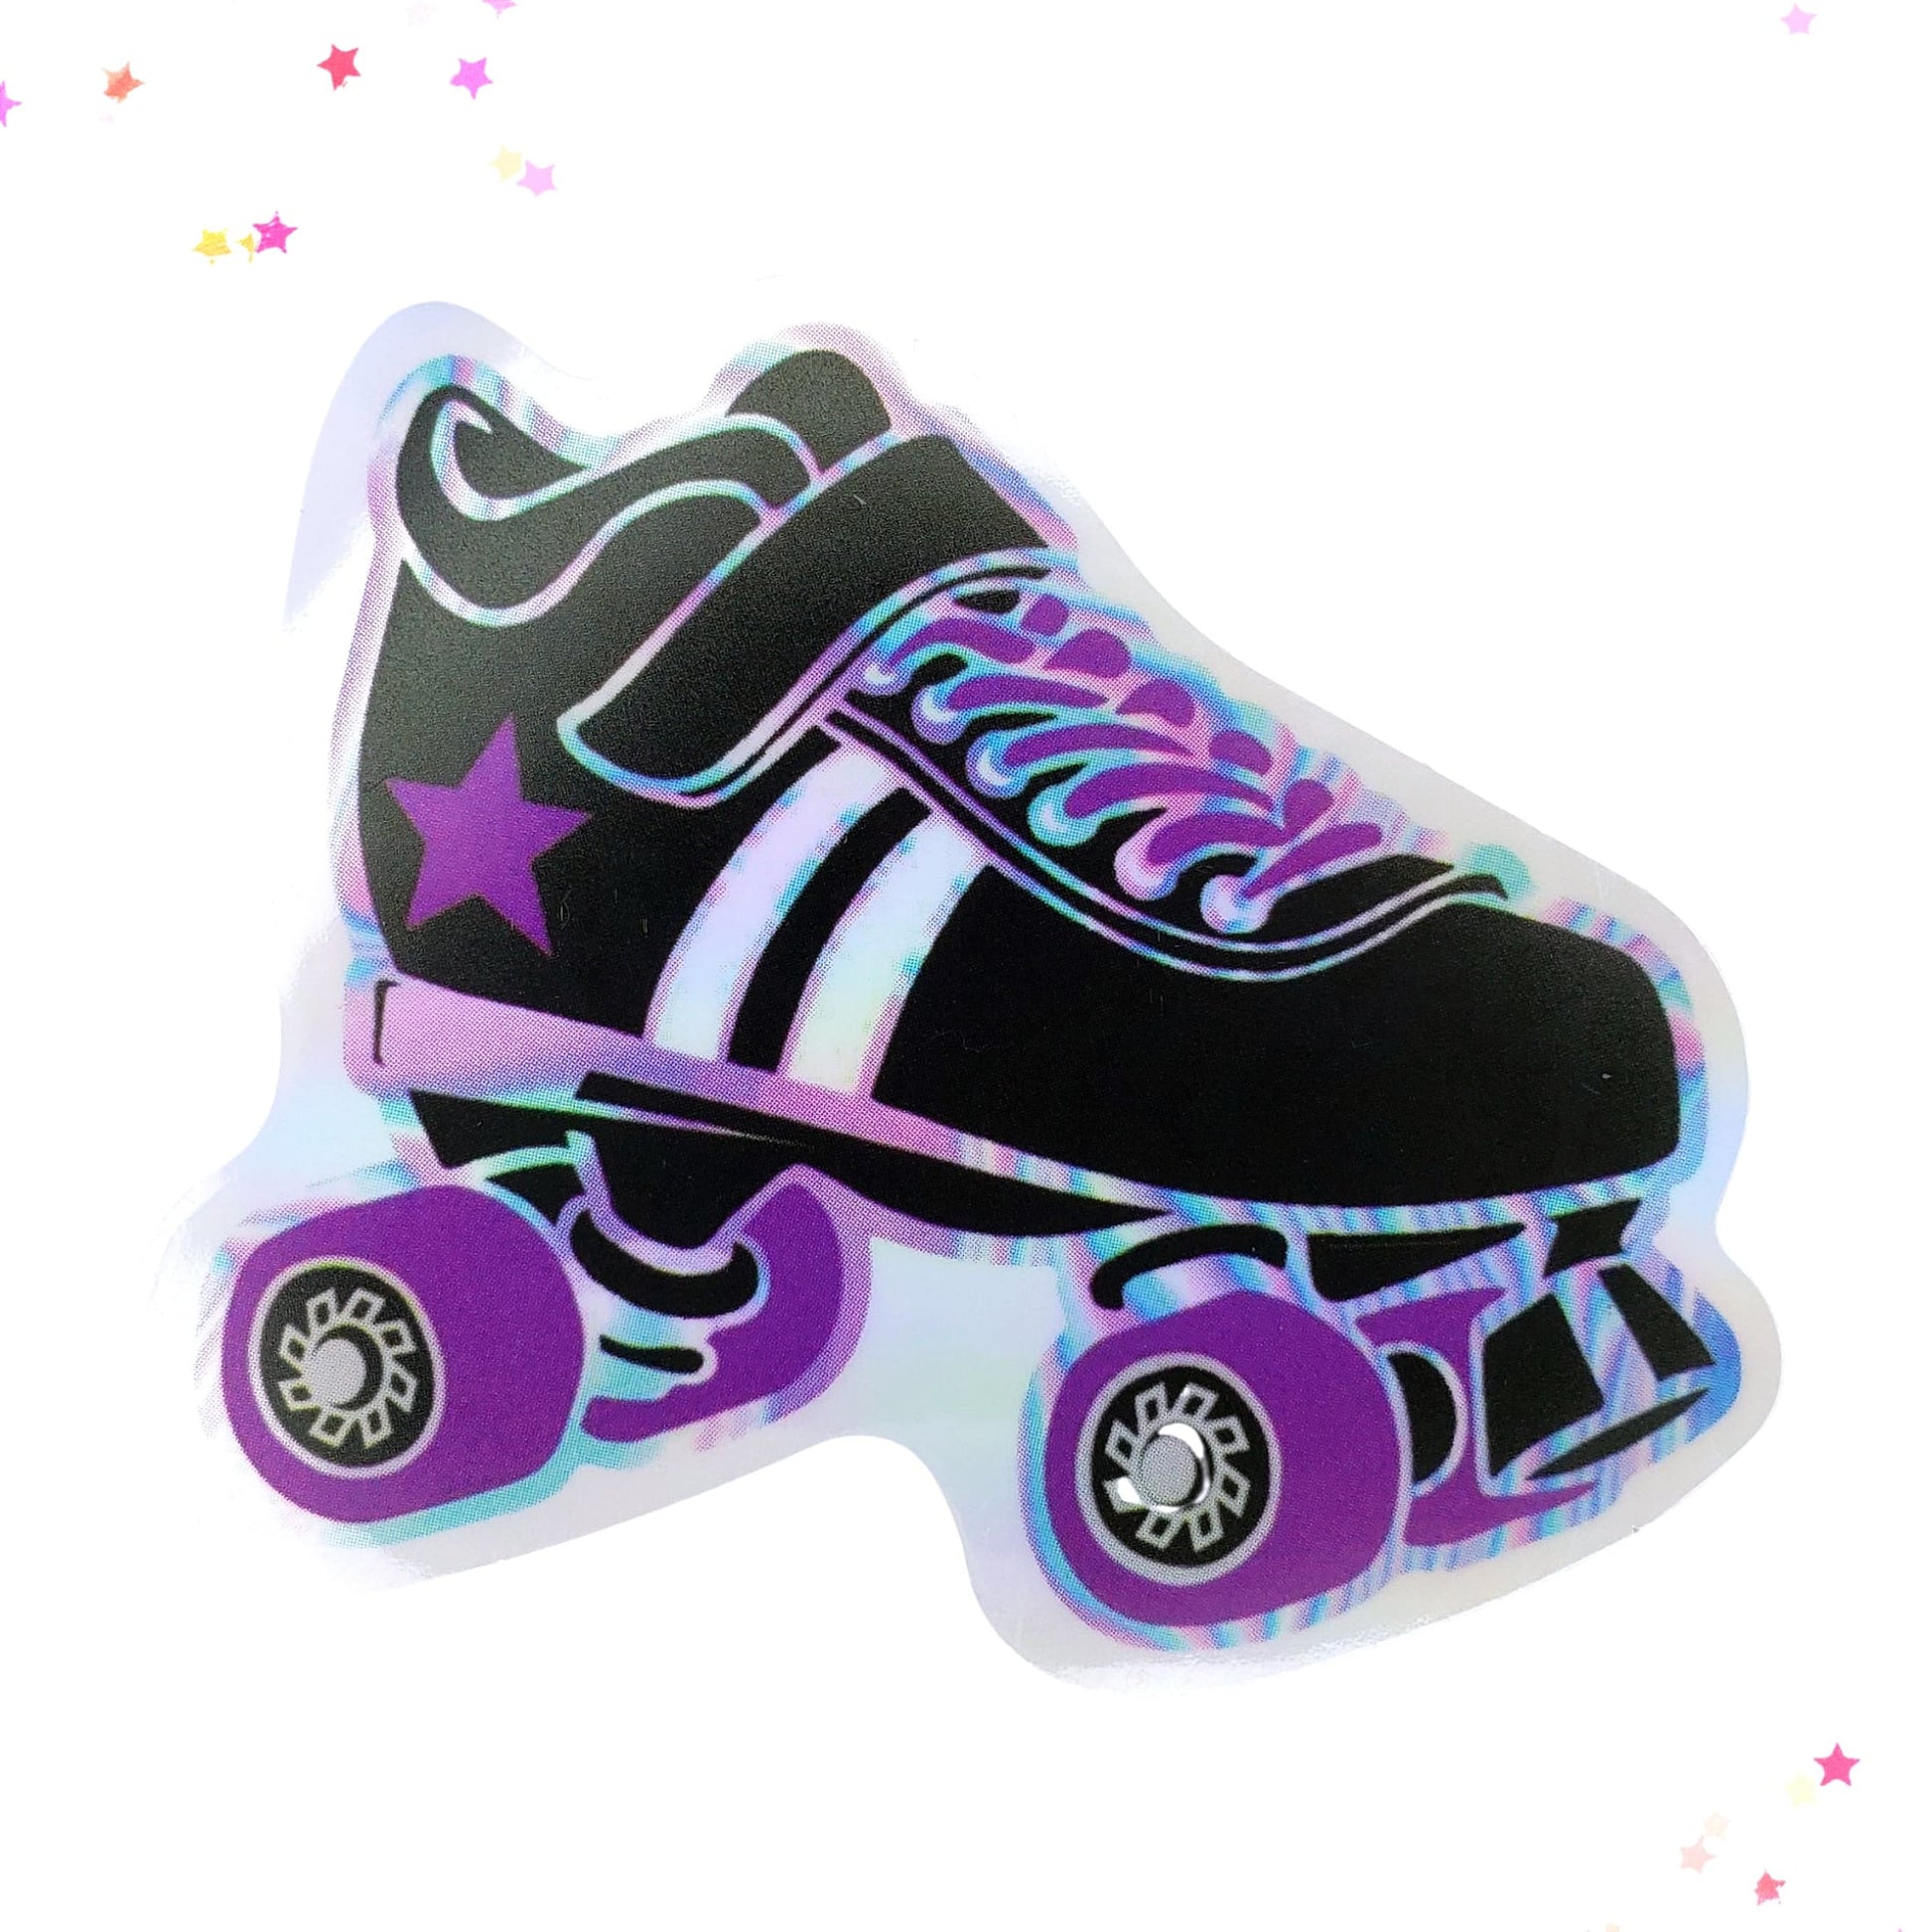 Black Shoe Purple Wheels Roller Skate Waterproof Holographic Sticker from Confetti Kitty, Only 1.0